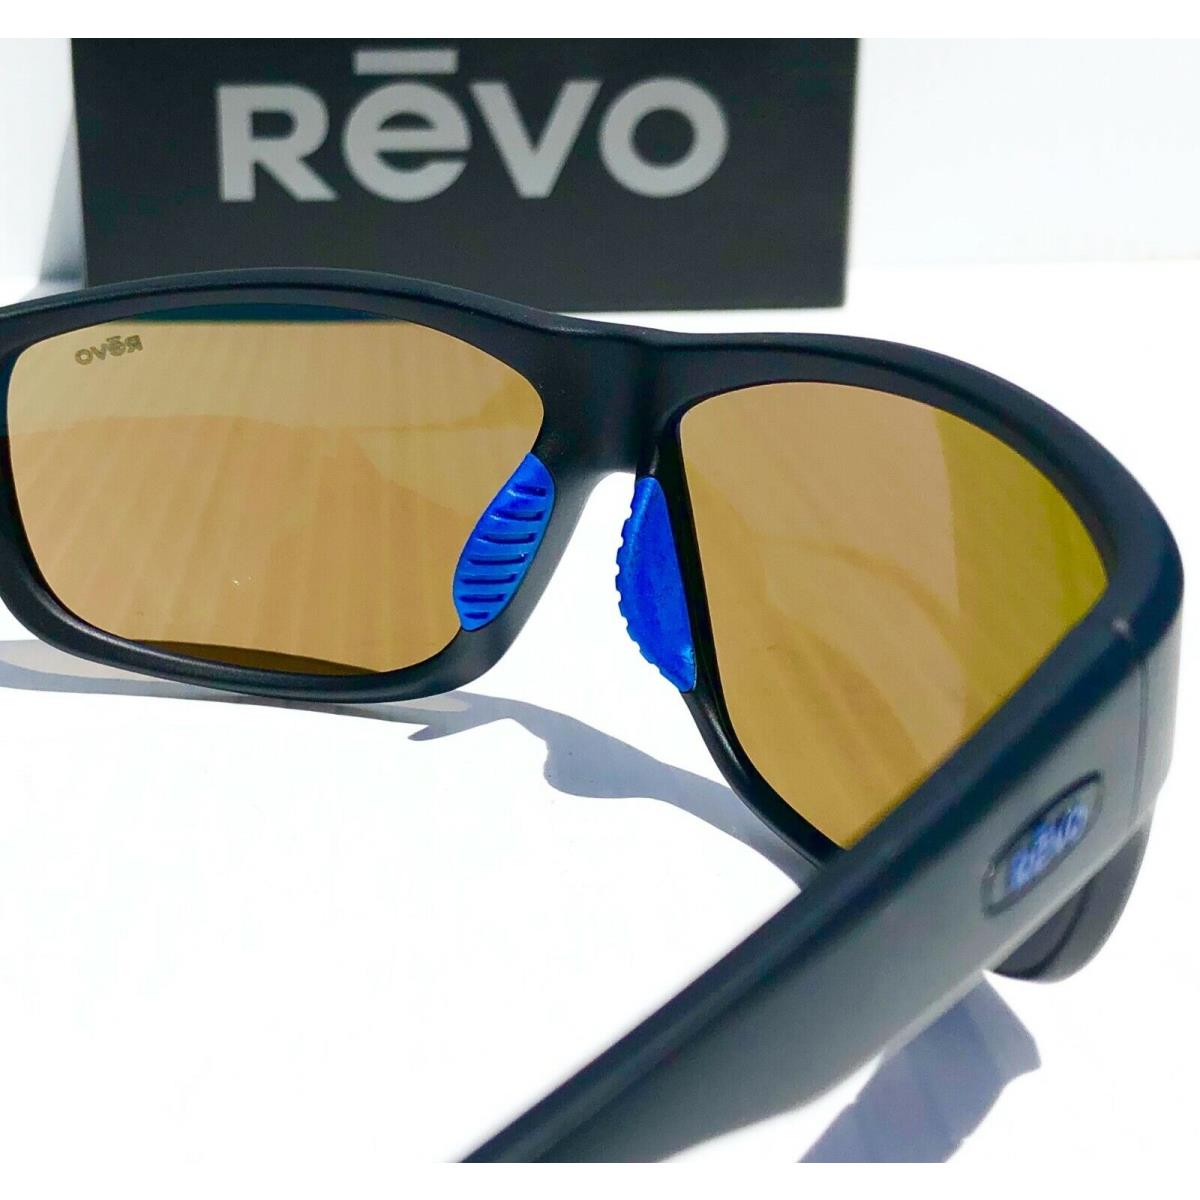 Revo sunglasses Bear Grylls Caper - Matte Black Frame, Shallow Green Water Polarized Lens